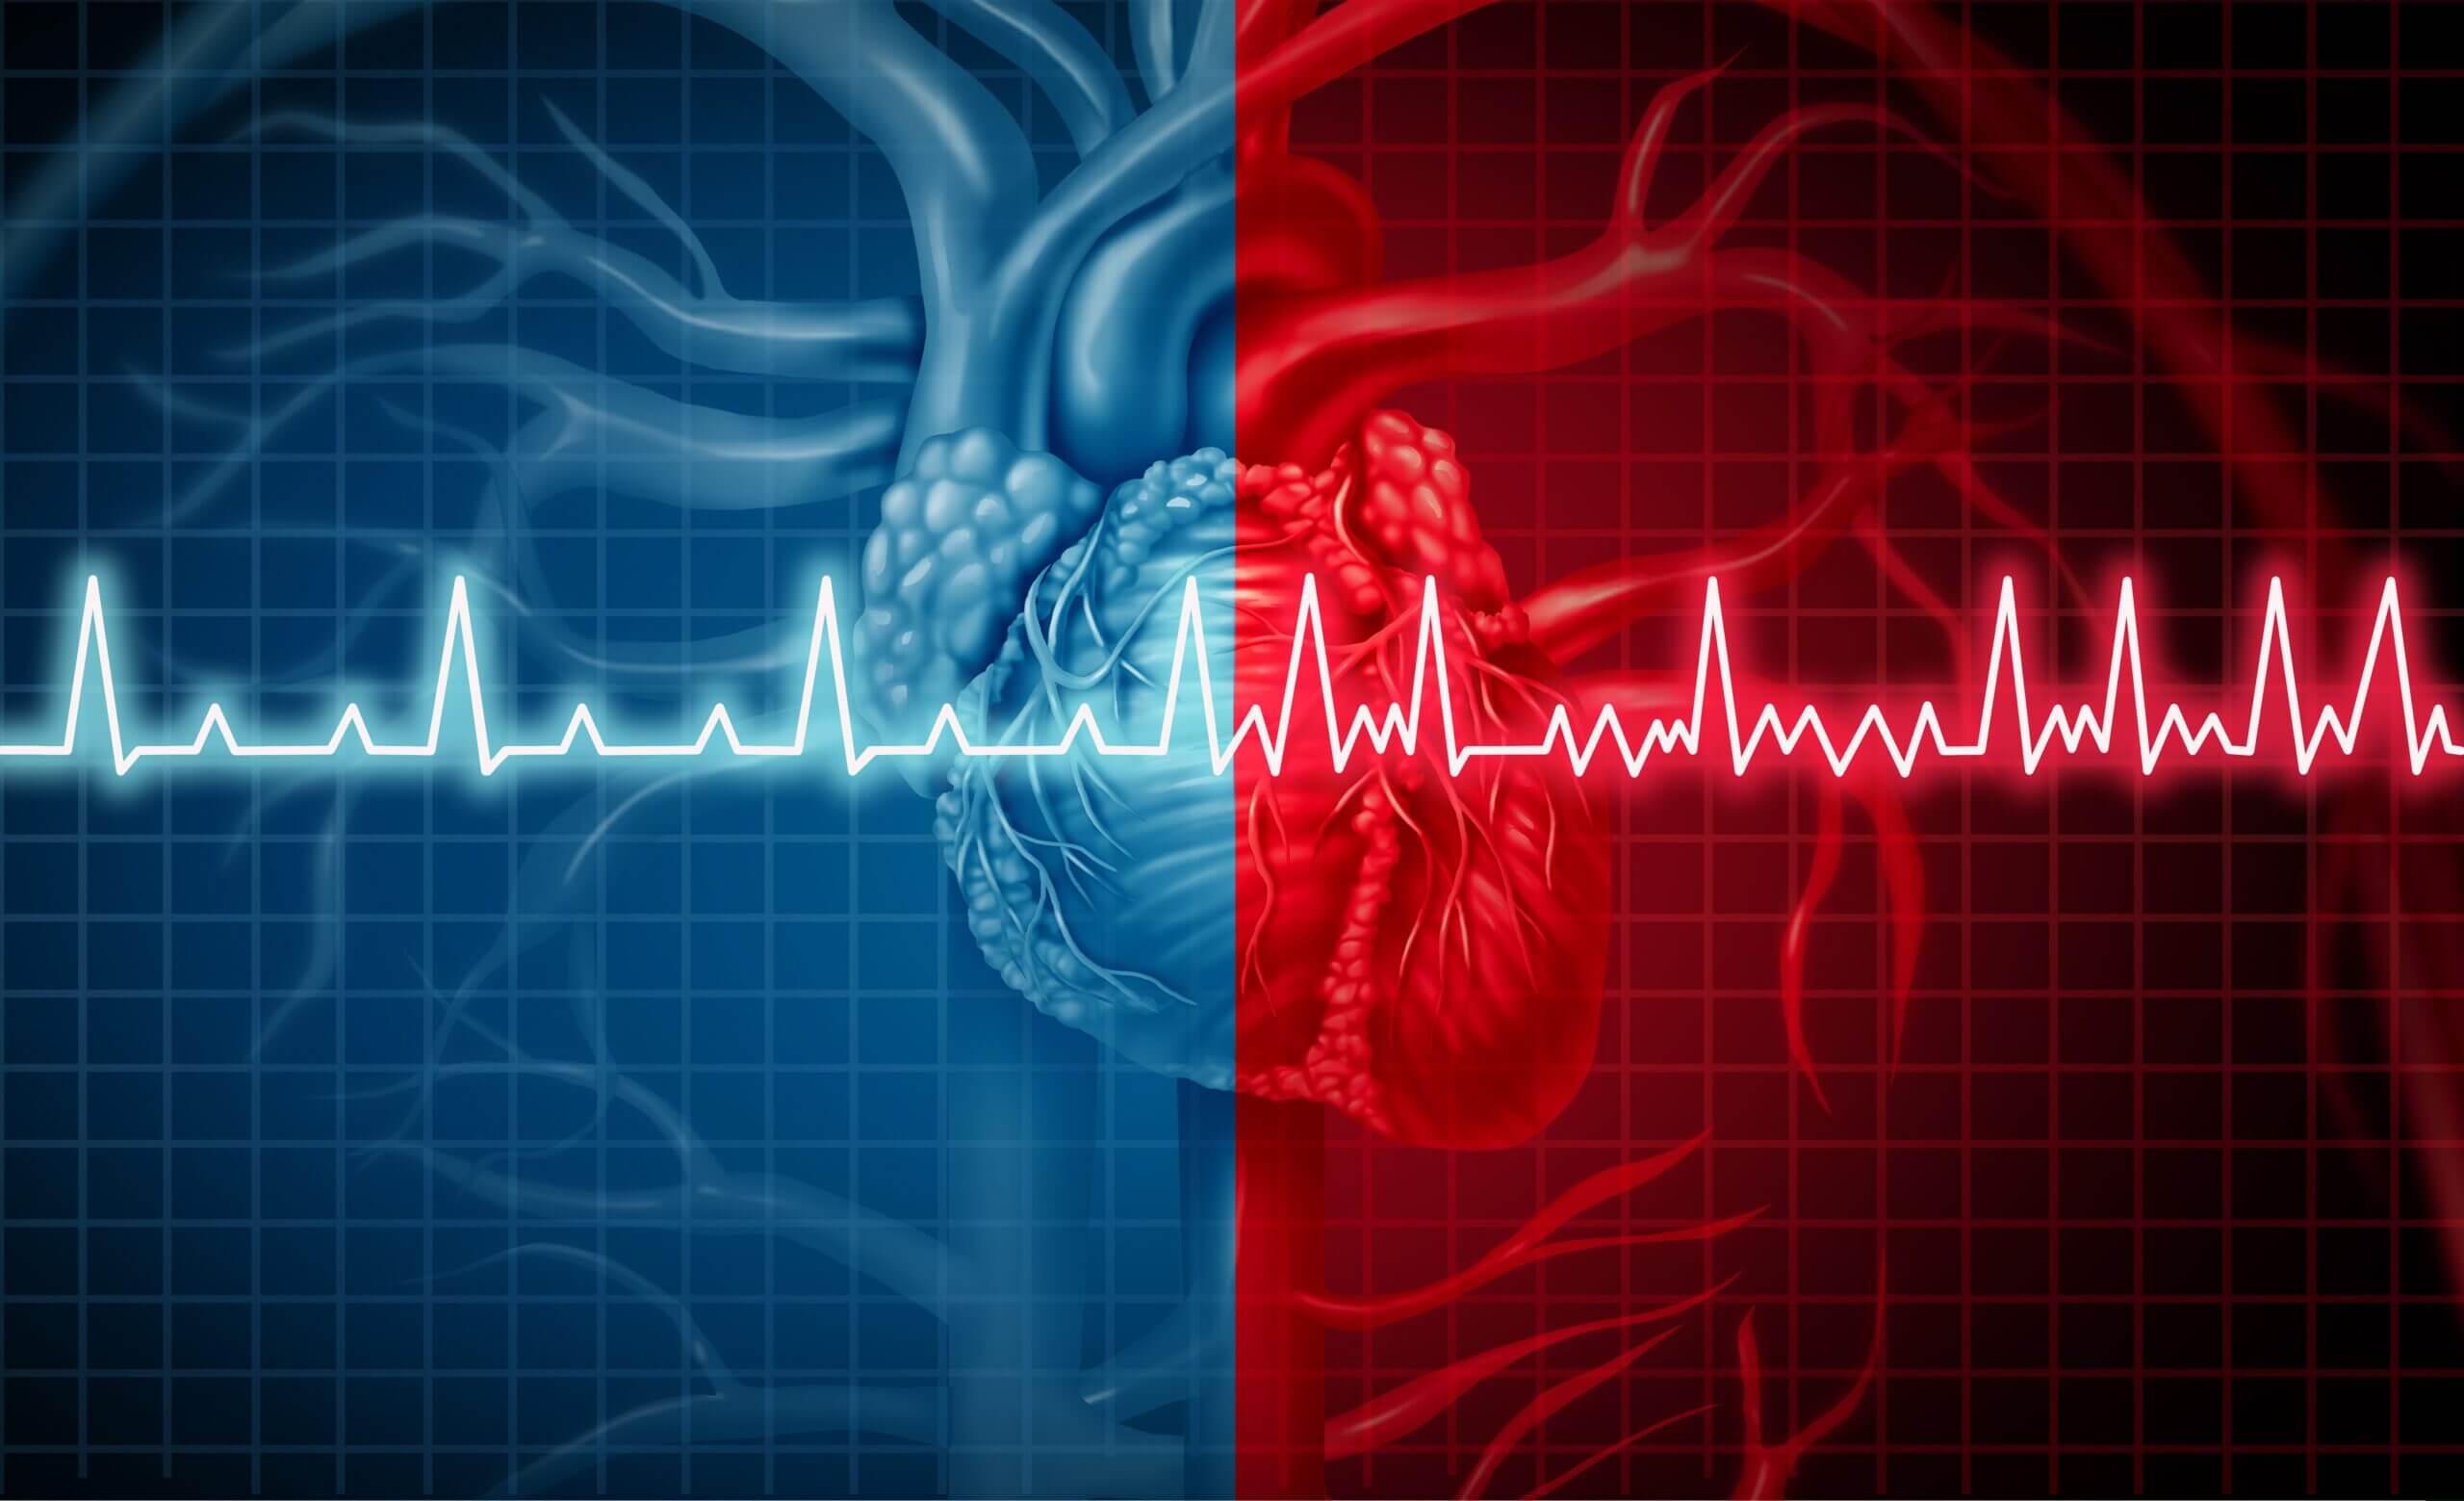 Atrial fibrillation and abnormal heart rate rhythm